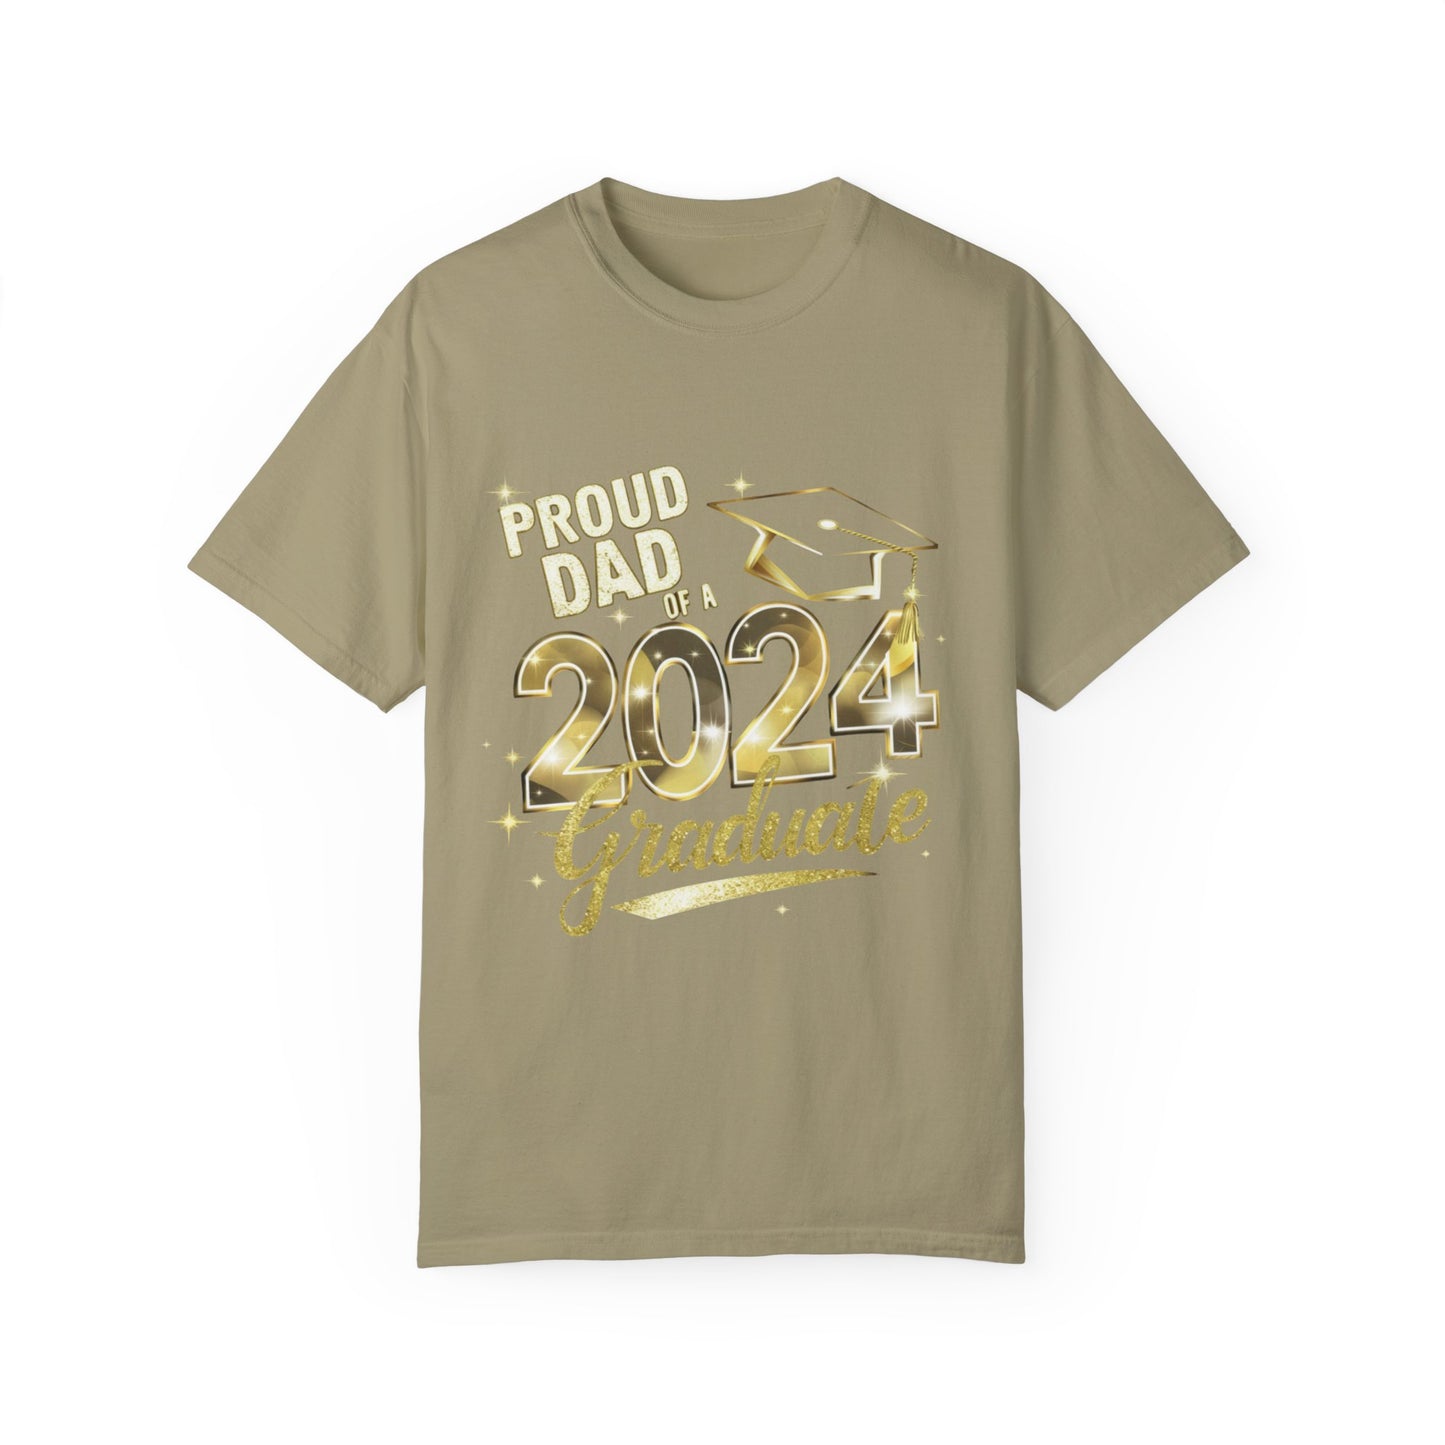 Proud of Dad 2024 Graduate Unisex Garment-dyed T-shirt Cotton Funny Humorous Graphic Soft Premium Unisex Men Women Khaki T-shirt Birthday Gift-11